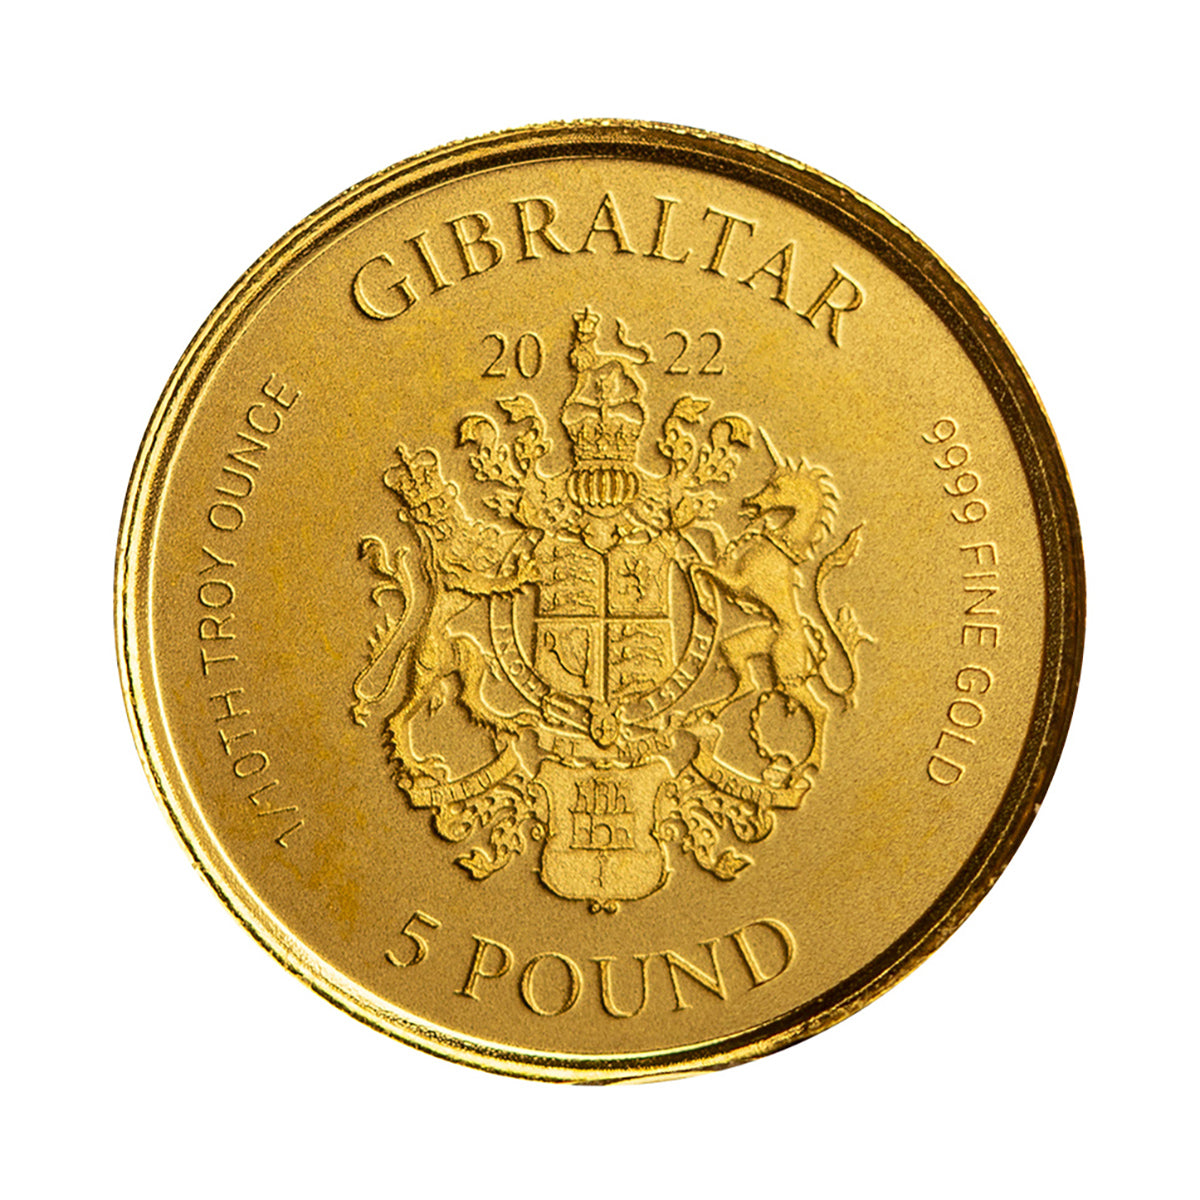 2022 Gibraltar Lady Justice 1 oz Silver Coin